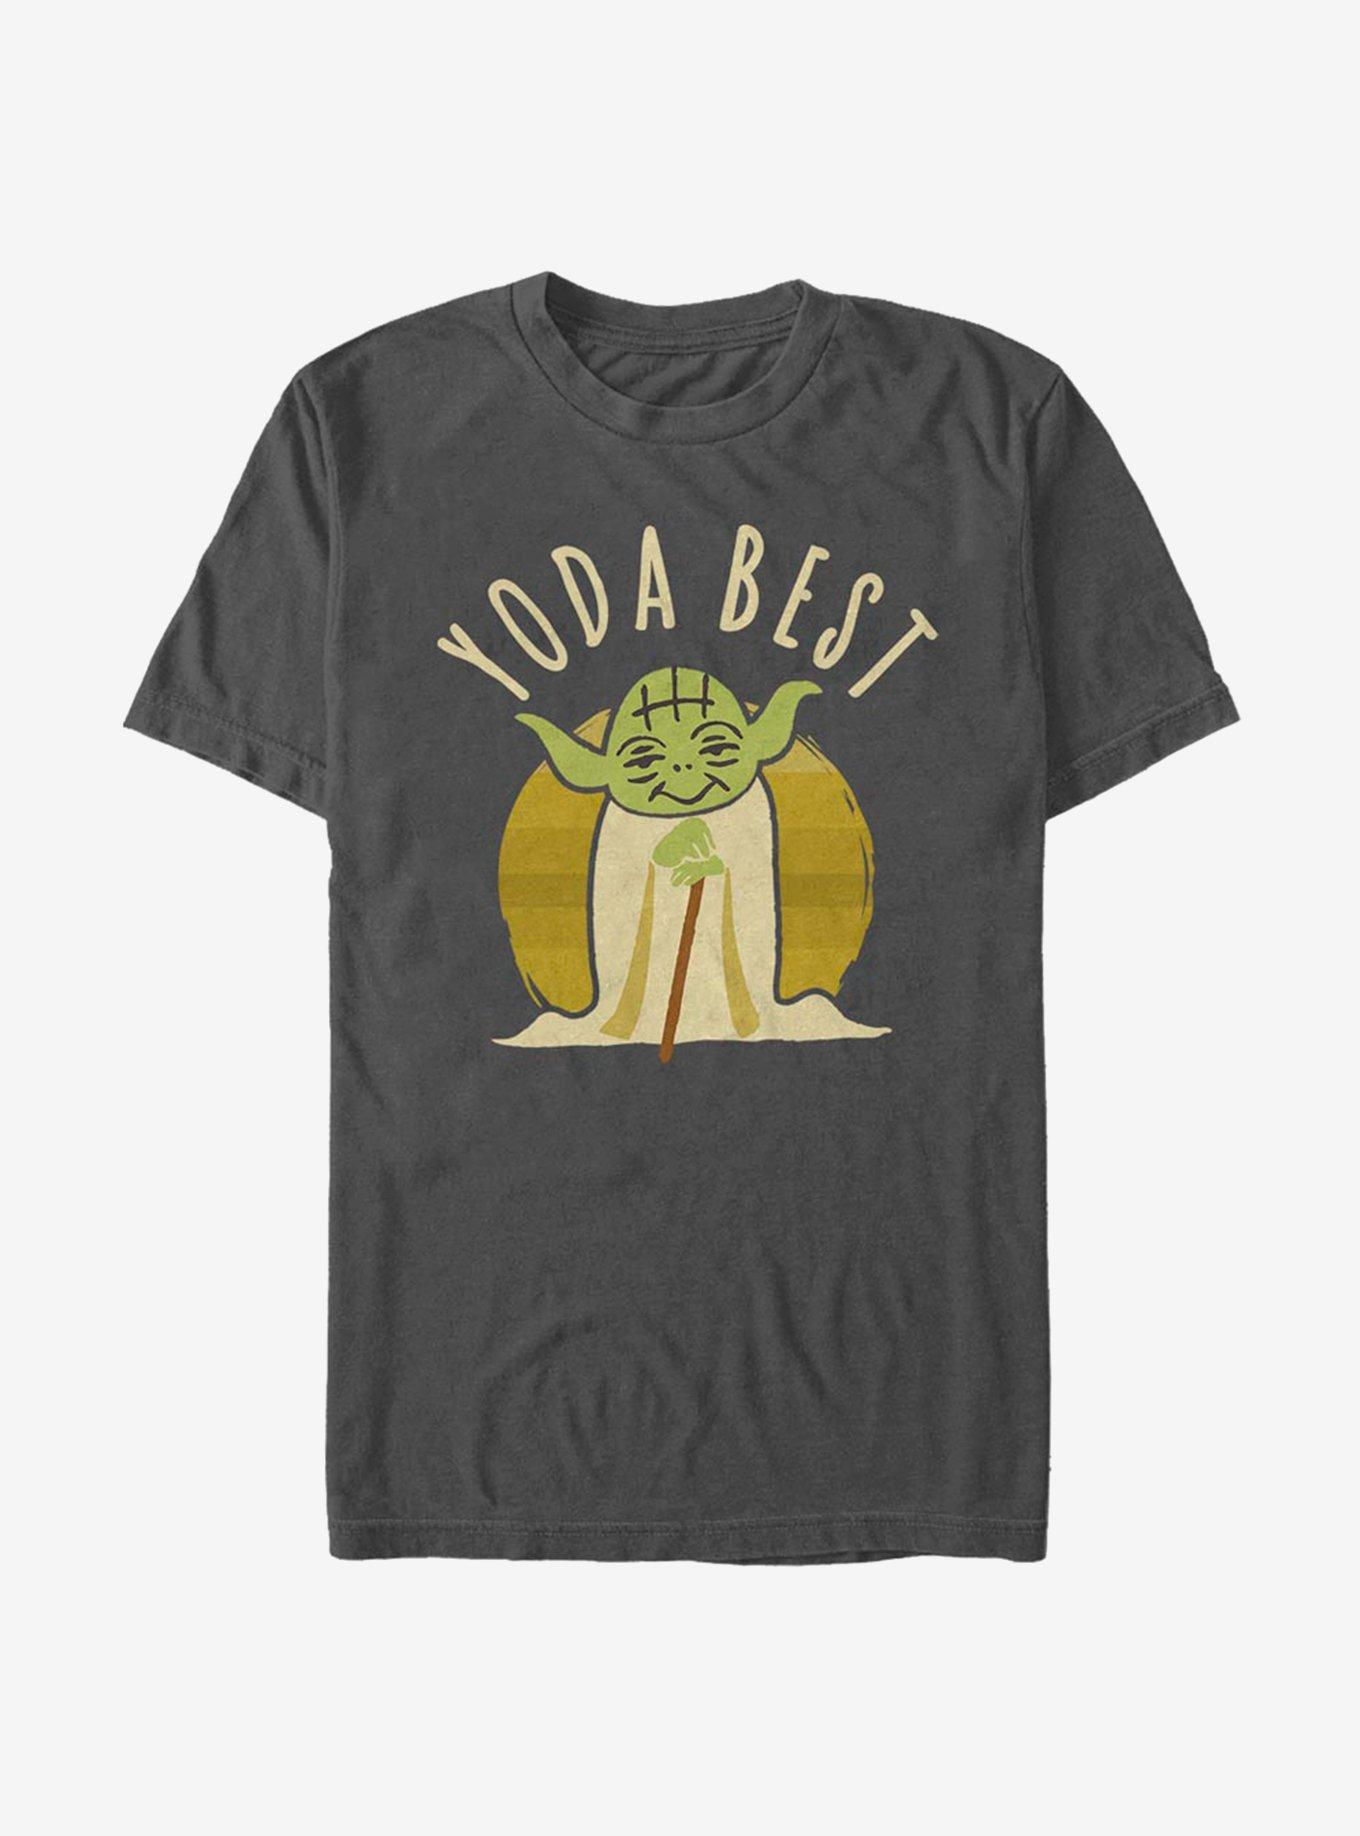 Star Wars Best Yoda Says T-Shirt